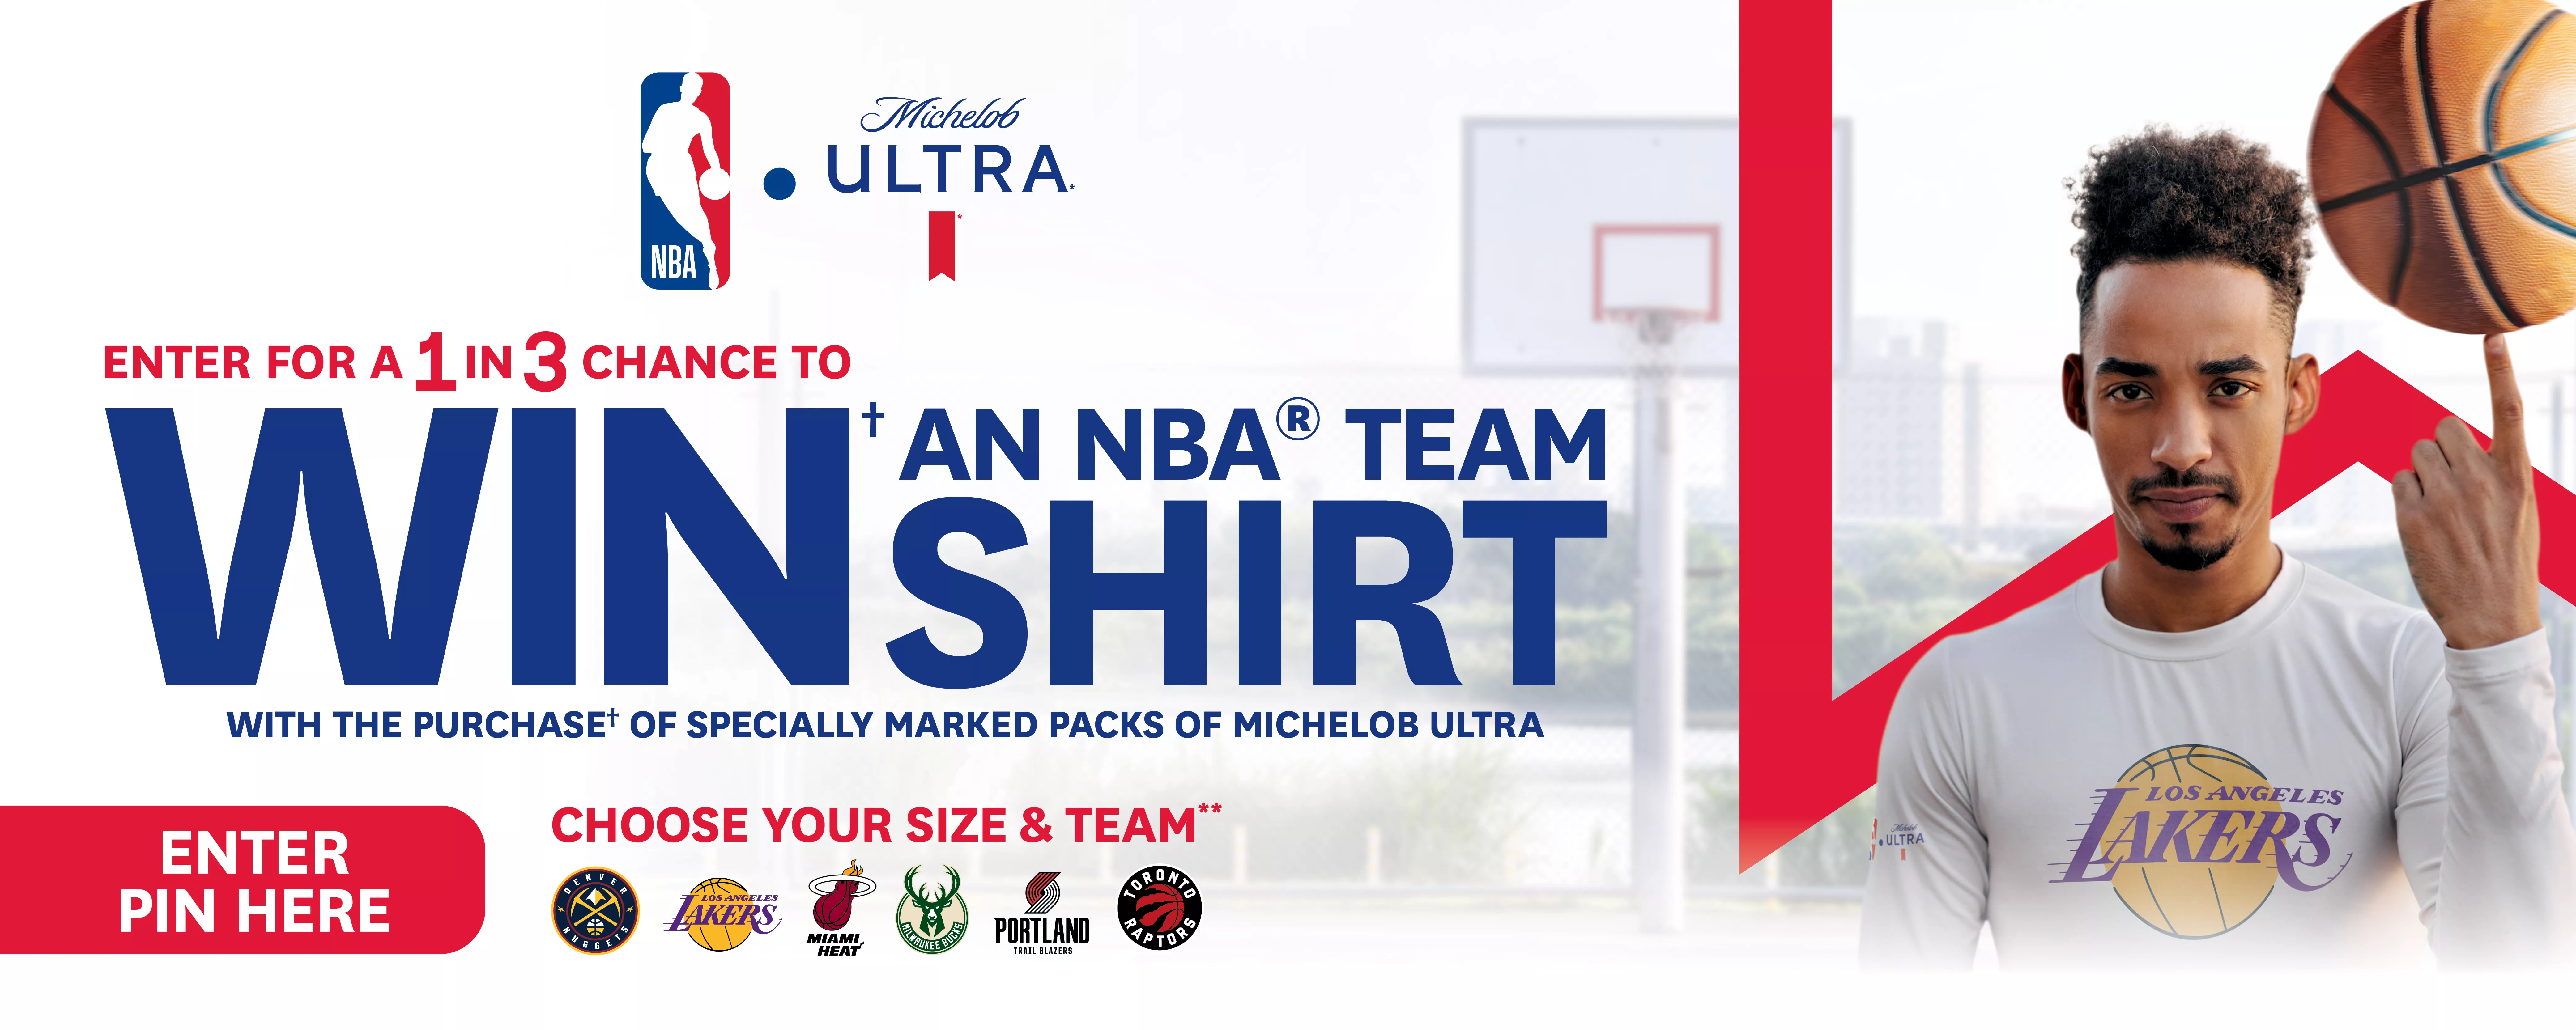 Enter to win a Michelob Ultra NBA team shirt